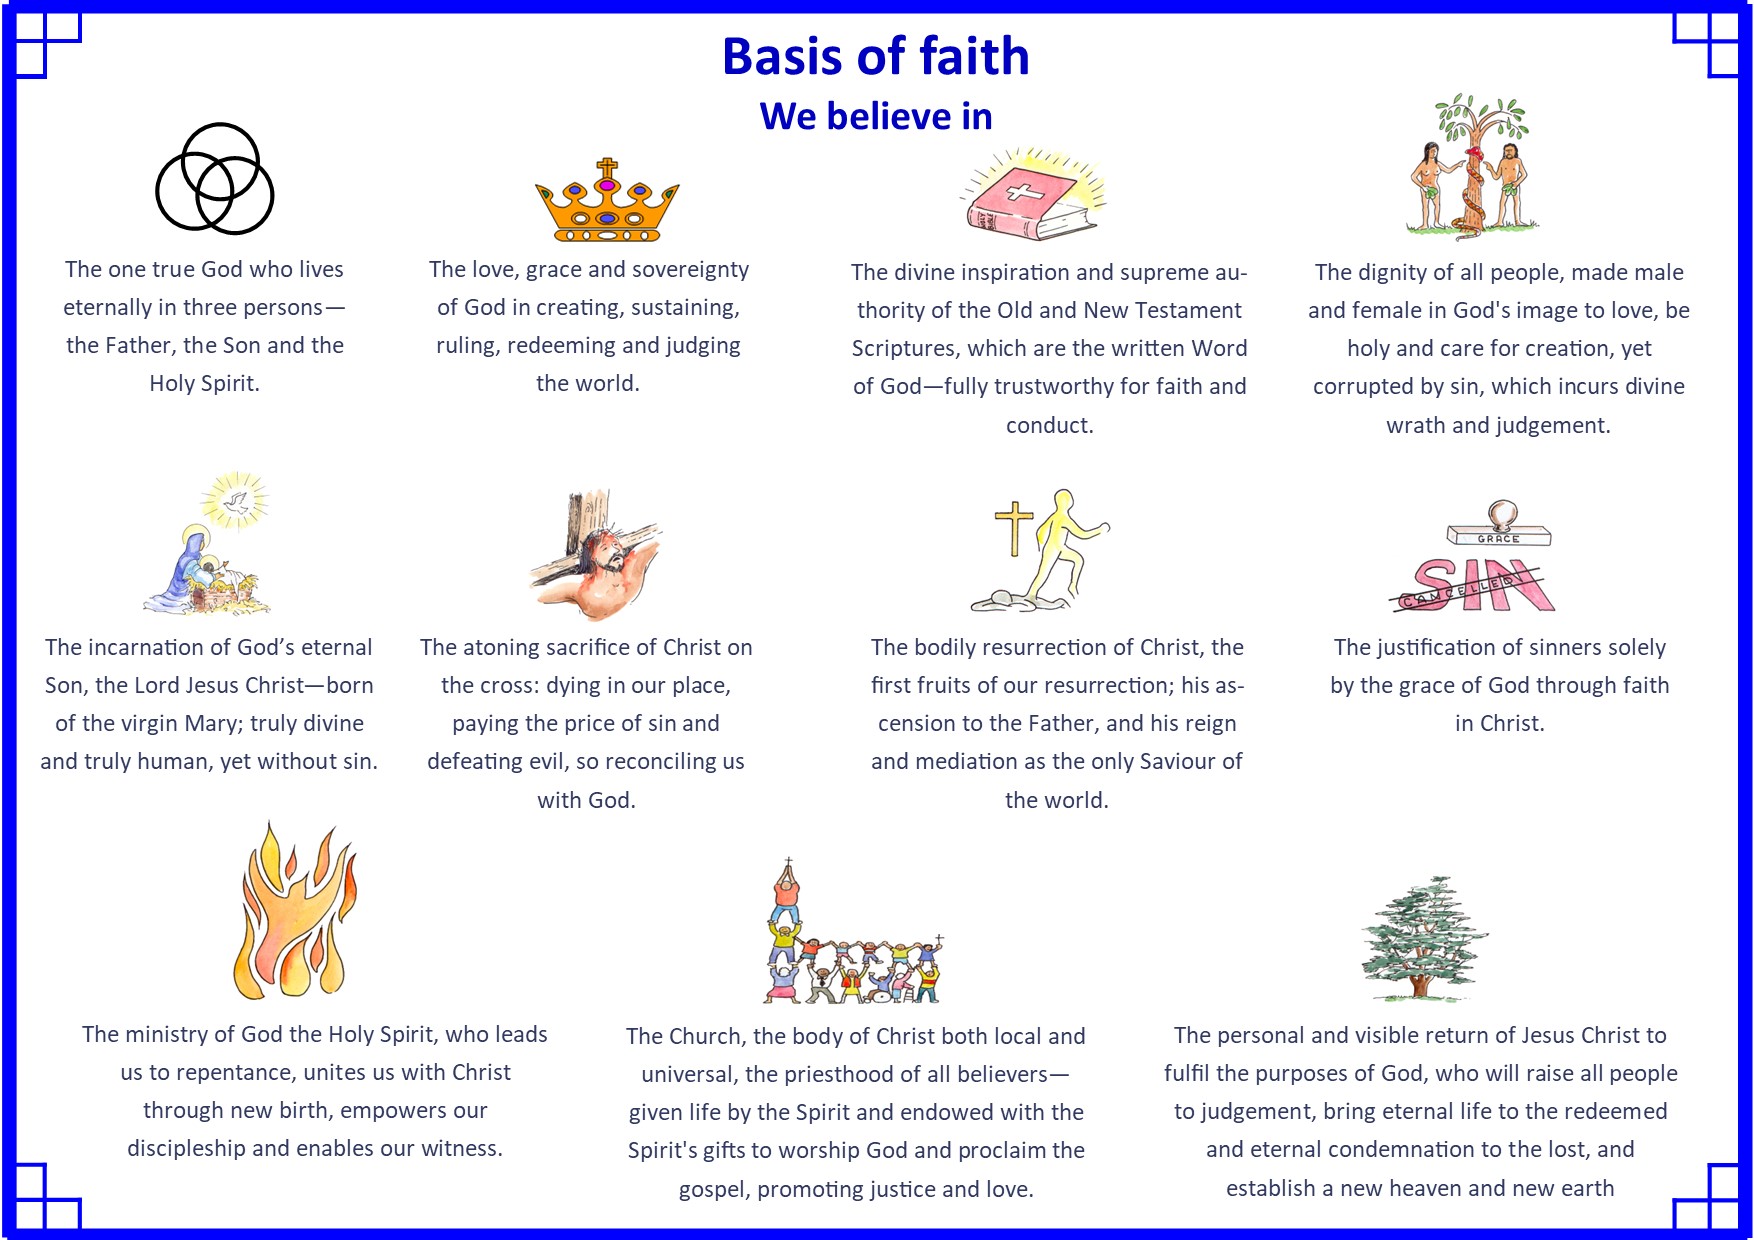 MET basis of Faith v2